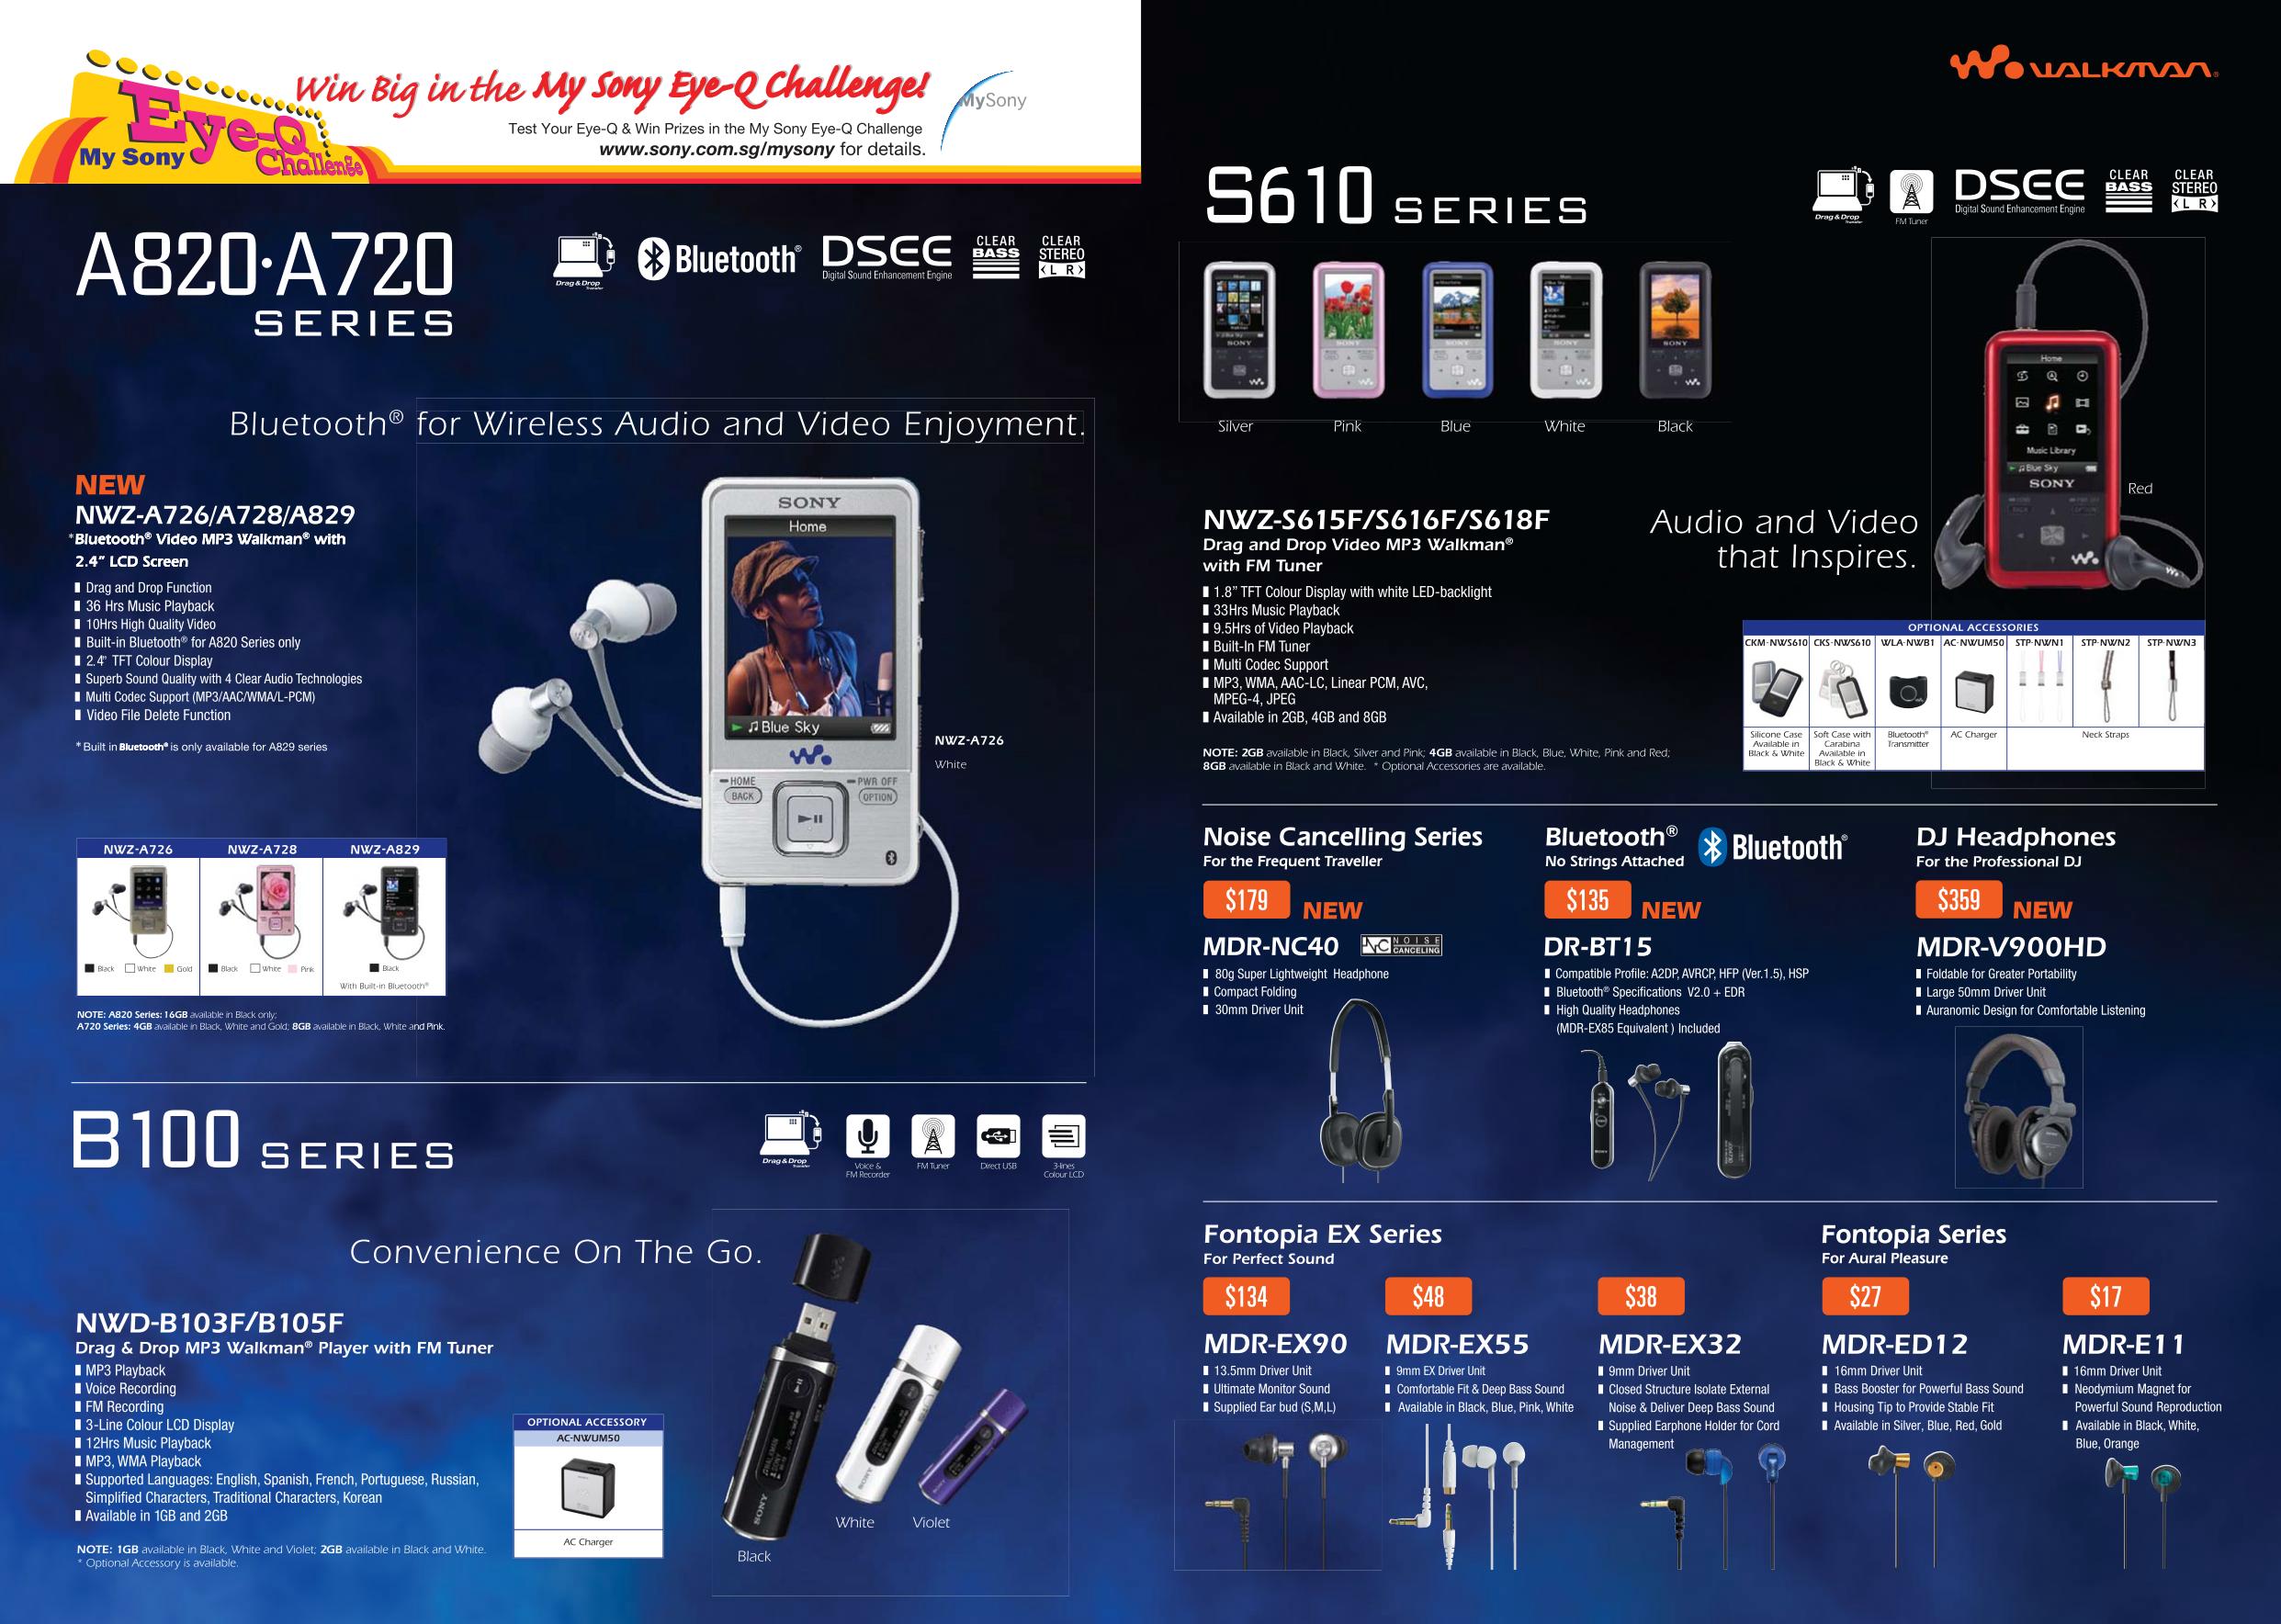 PC Show 2008 price list image brochure of Sony Walkman.pdf 04